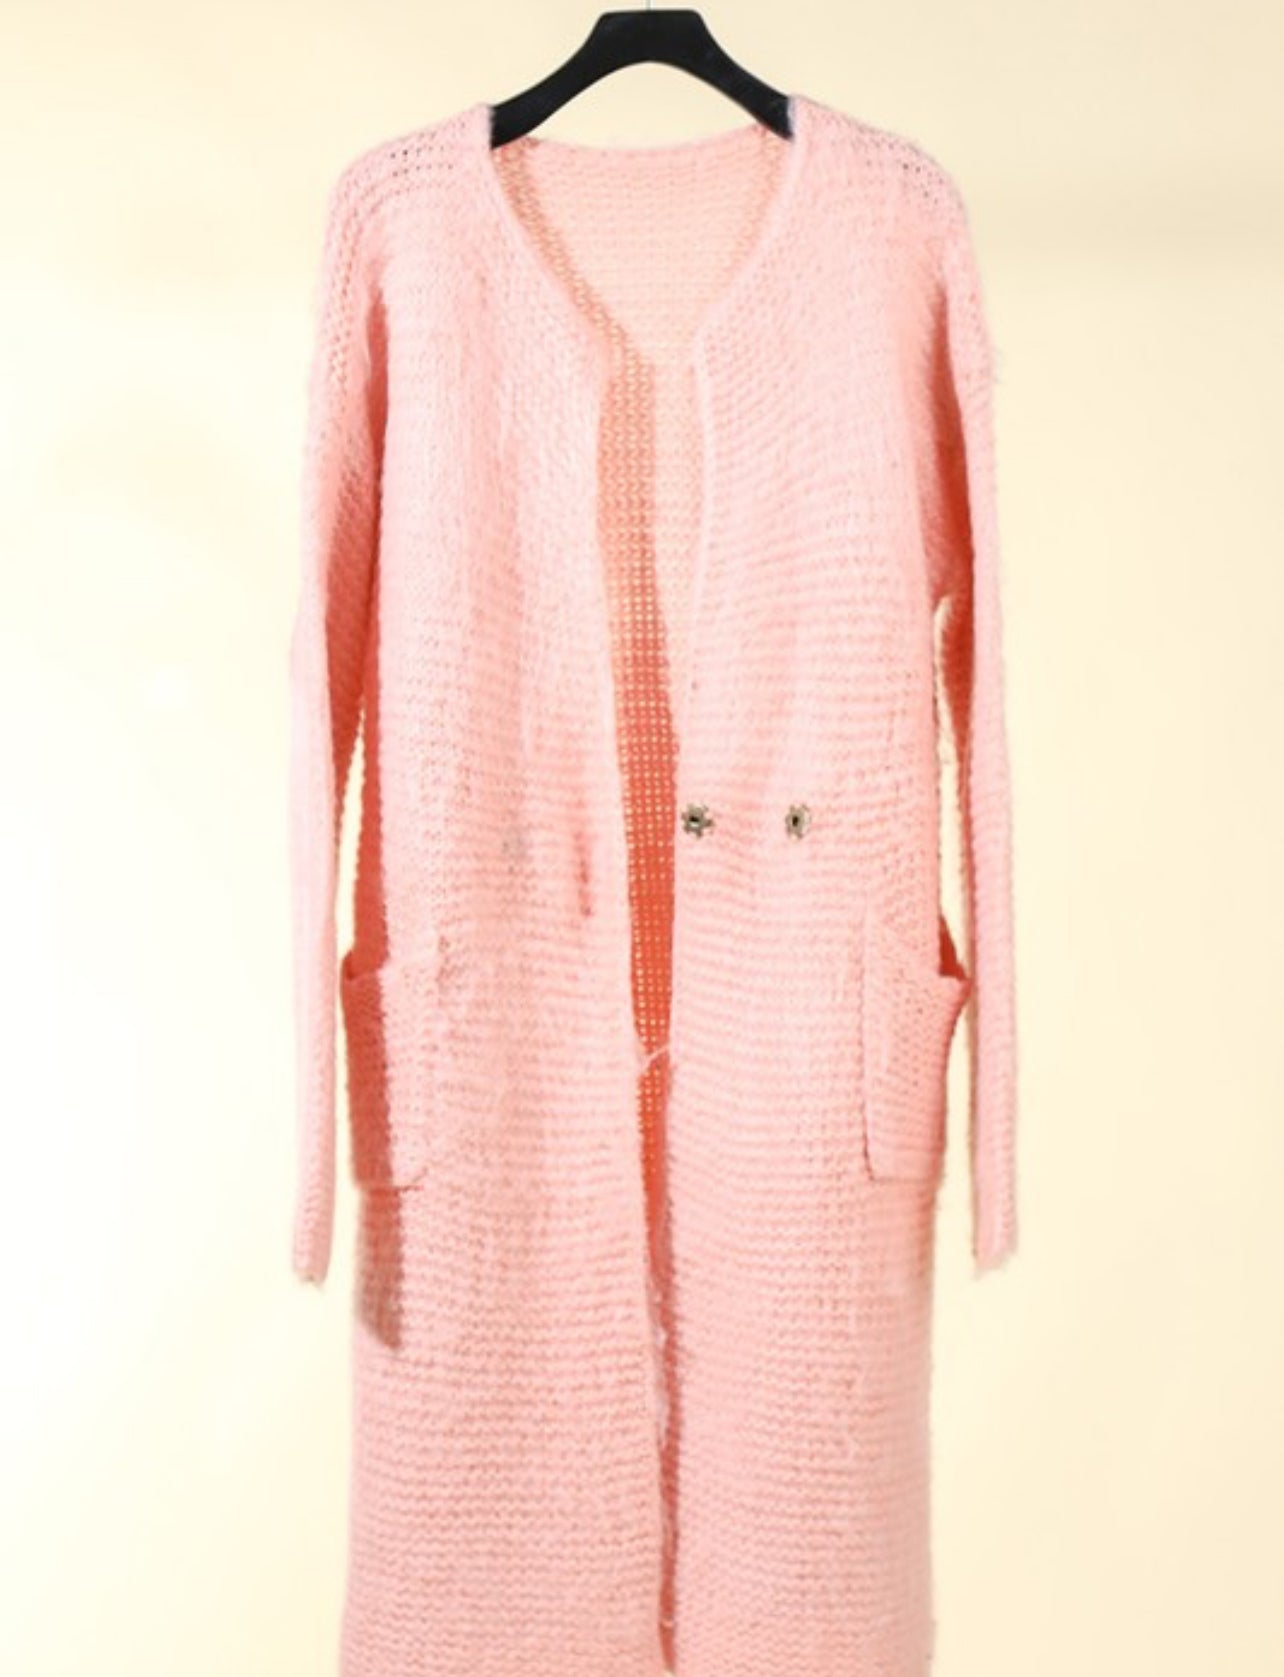 Knit, long spring coat